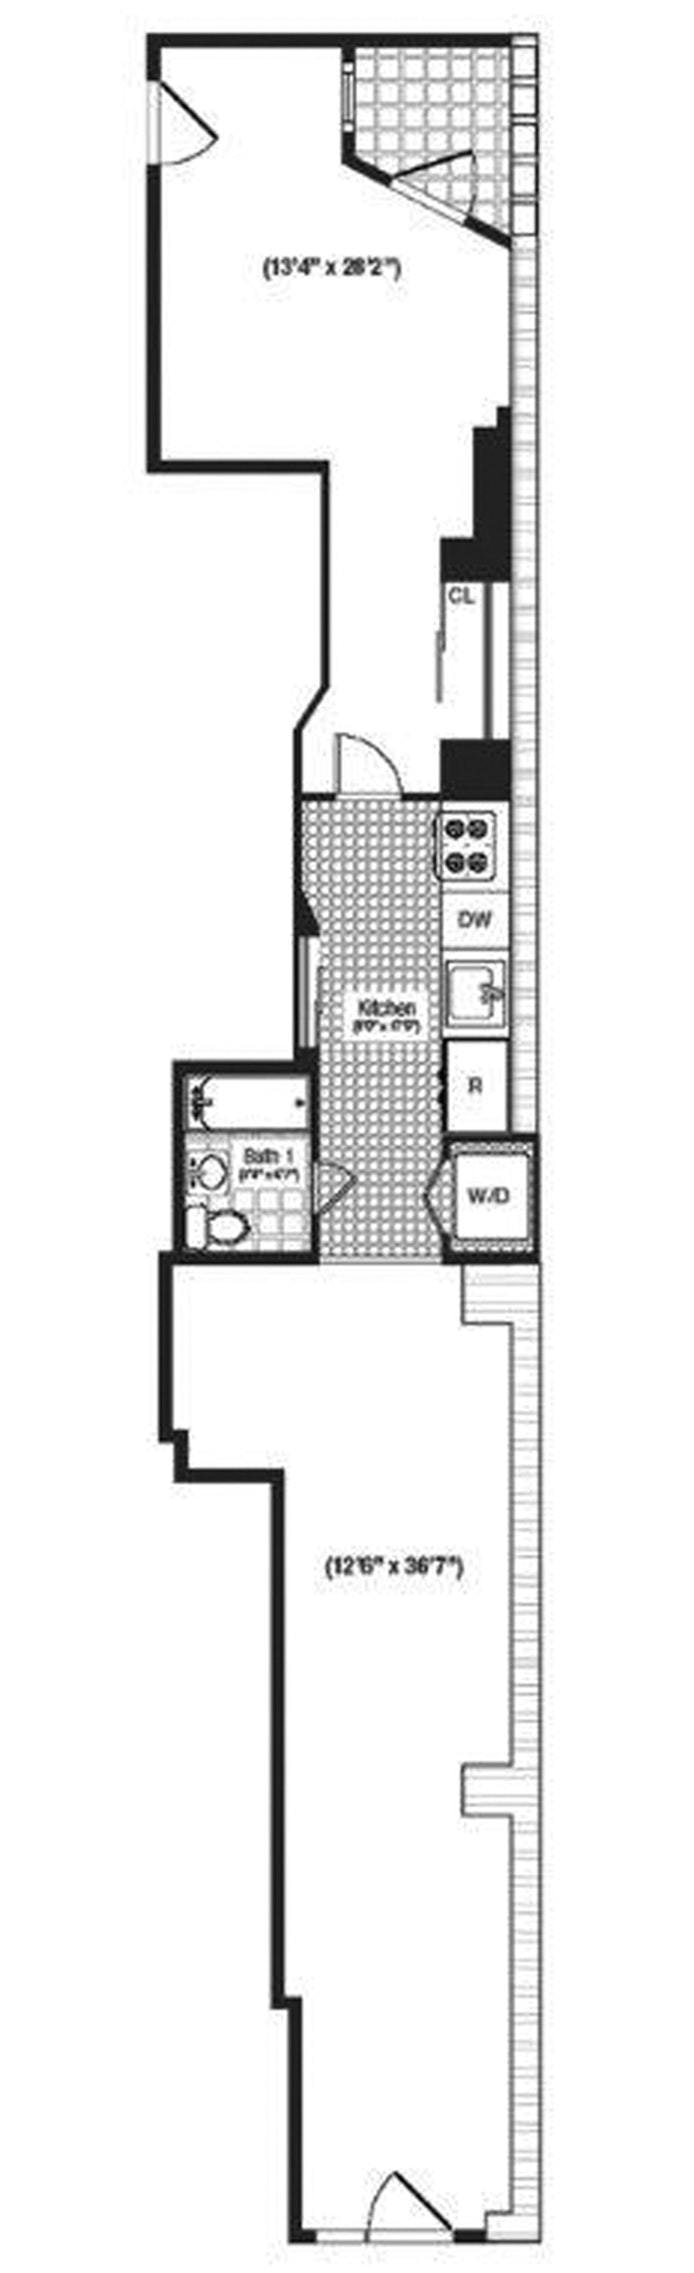 Floorplan for 36 Laight Street, 1F